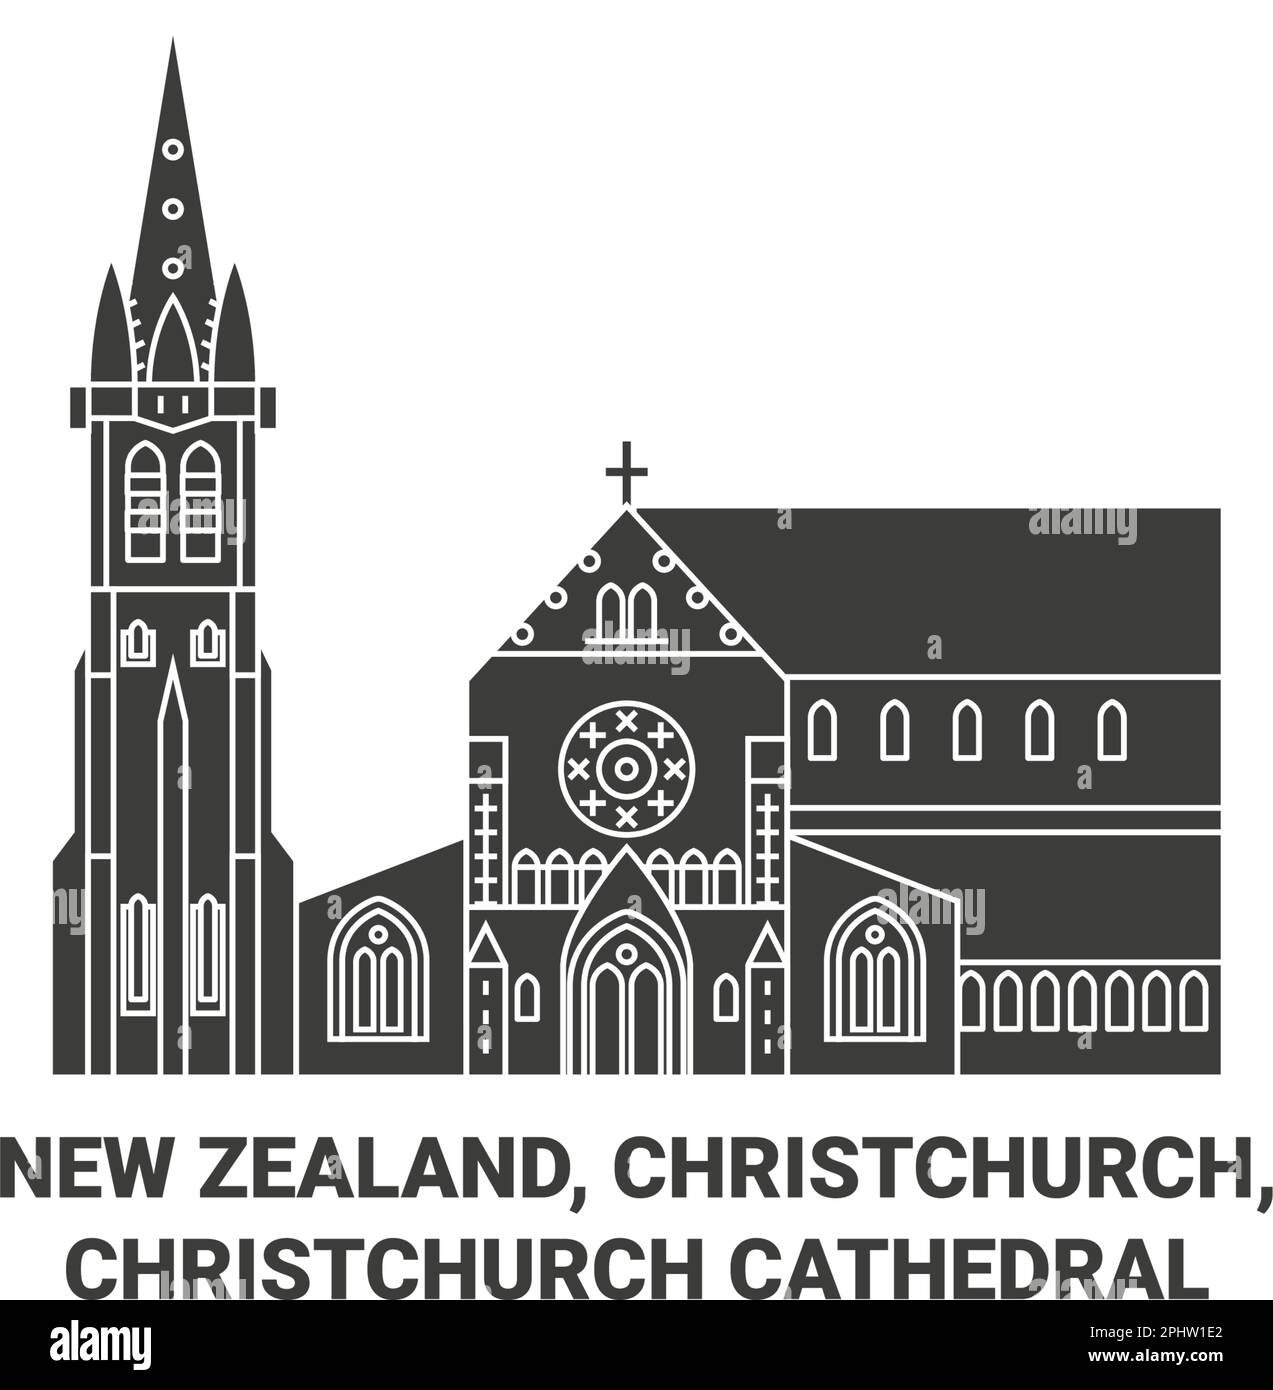 New Zealand, Christchurch, Christchurch Cathedral travel landmark vector illustration Stock Vector